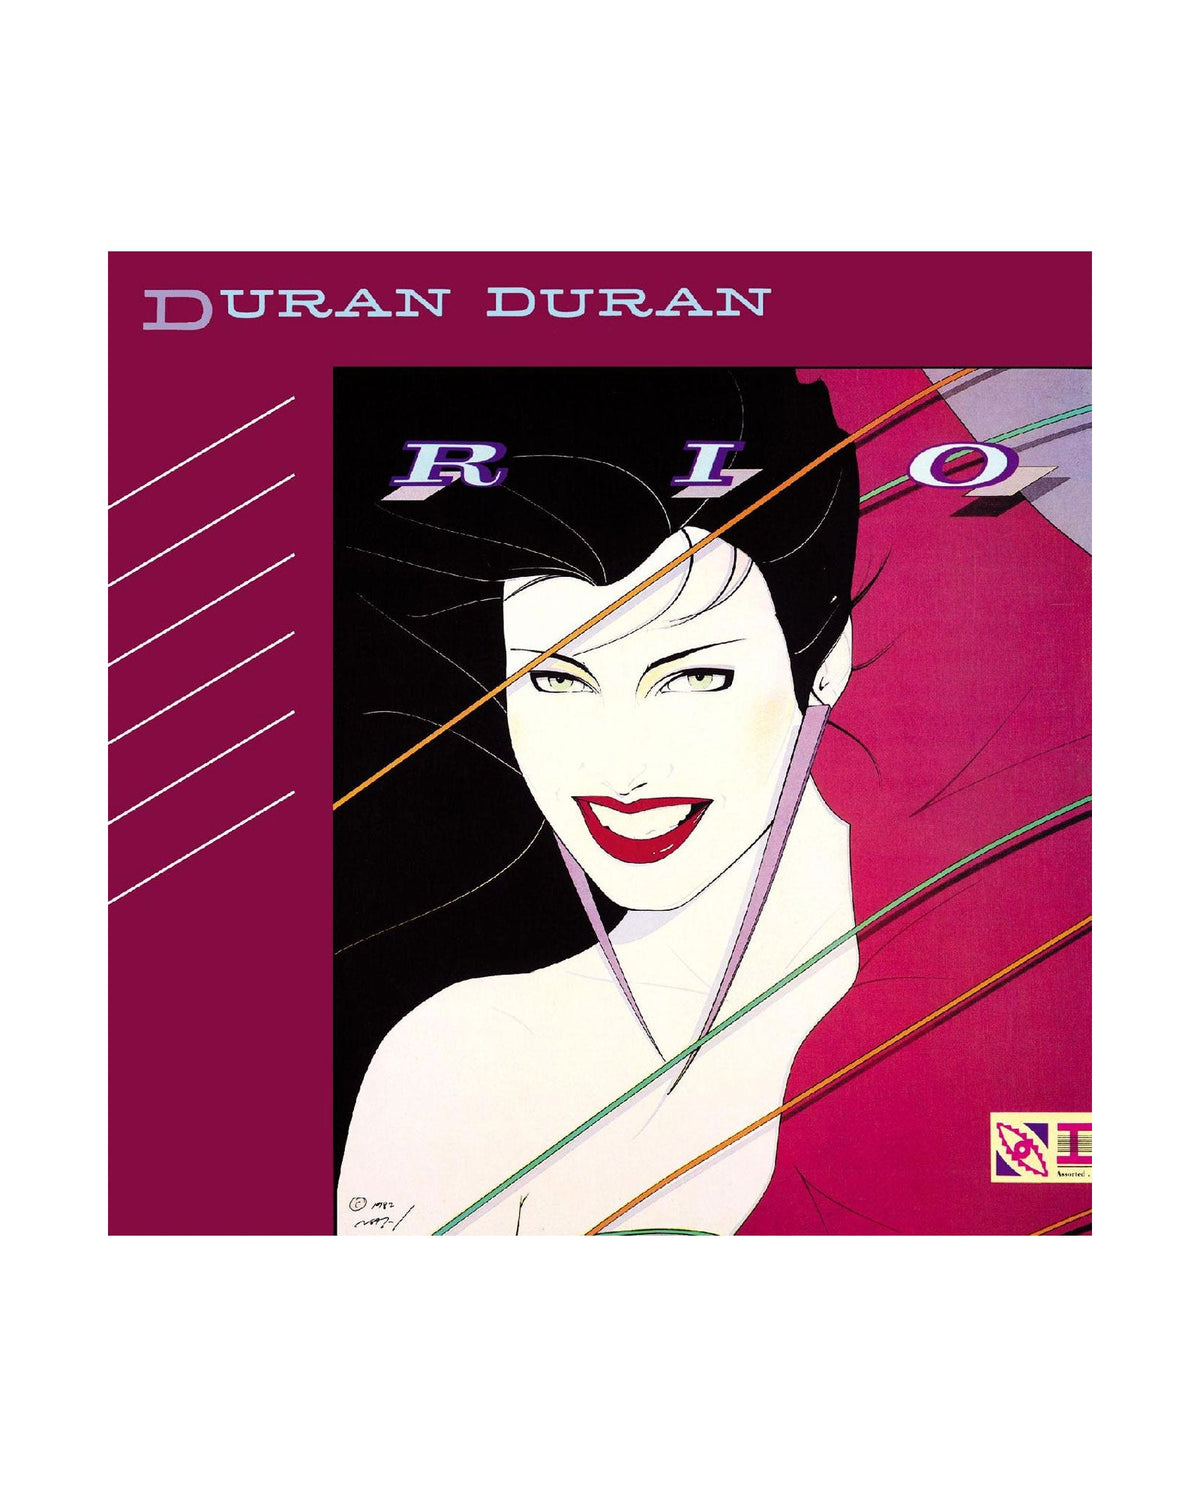 Duran Duran - LP Vinilo "Rio" - D2fy · Rocktud - D2fy